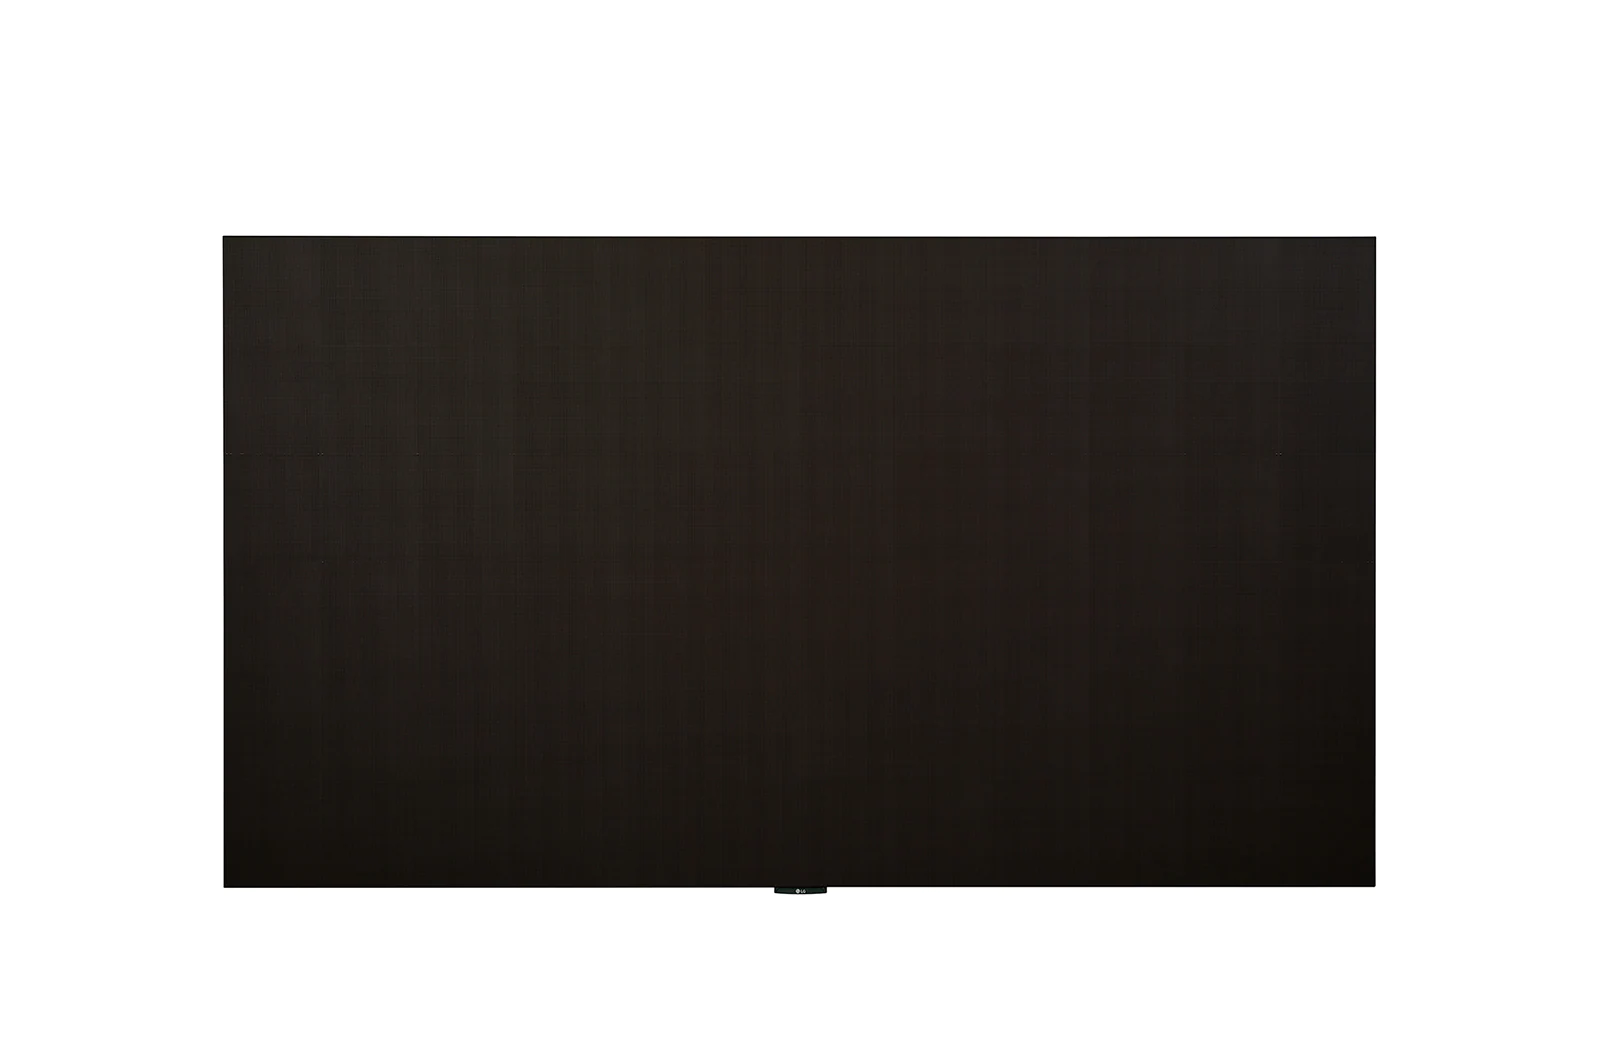 LG LAEC015-GN2 136 Zoll LED-Wall - 136 Zoll - 1.56mm PP - 500  cd/m² - Full-HD - 1920 x 1080 - SMD LED-Display